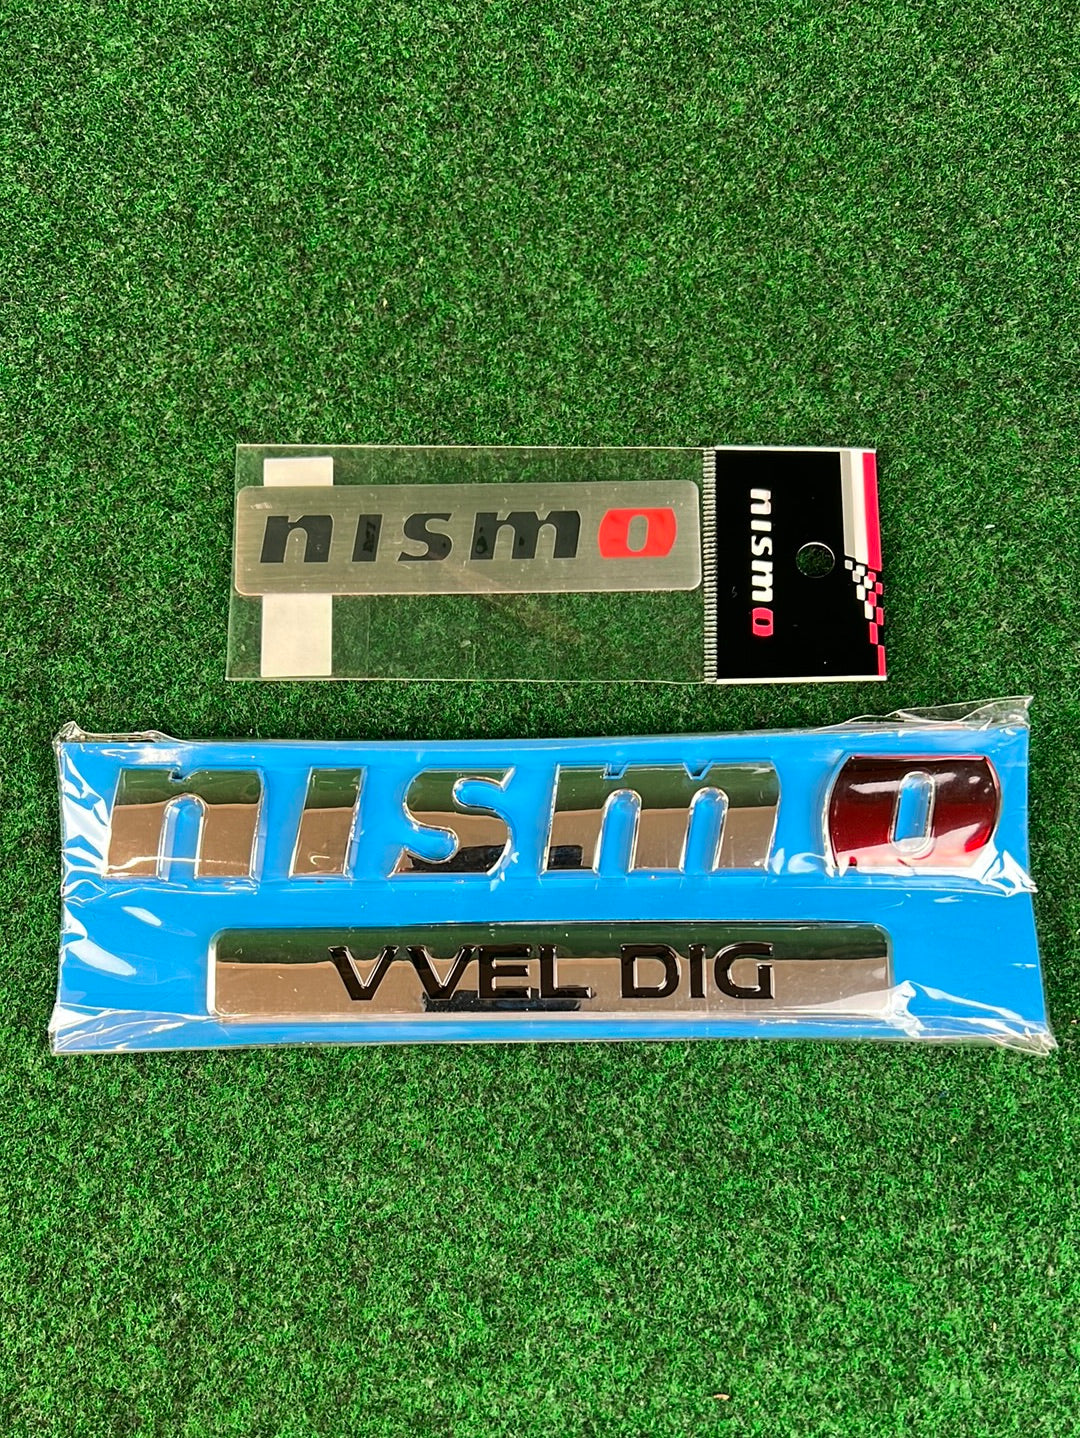 NISMO - Nissan Patrol Armada Pathfinder NISMO & VVEL DIG Replica Emblem and Authentic Brushed Nismo Plate Set